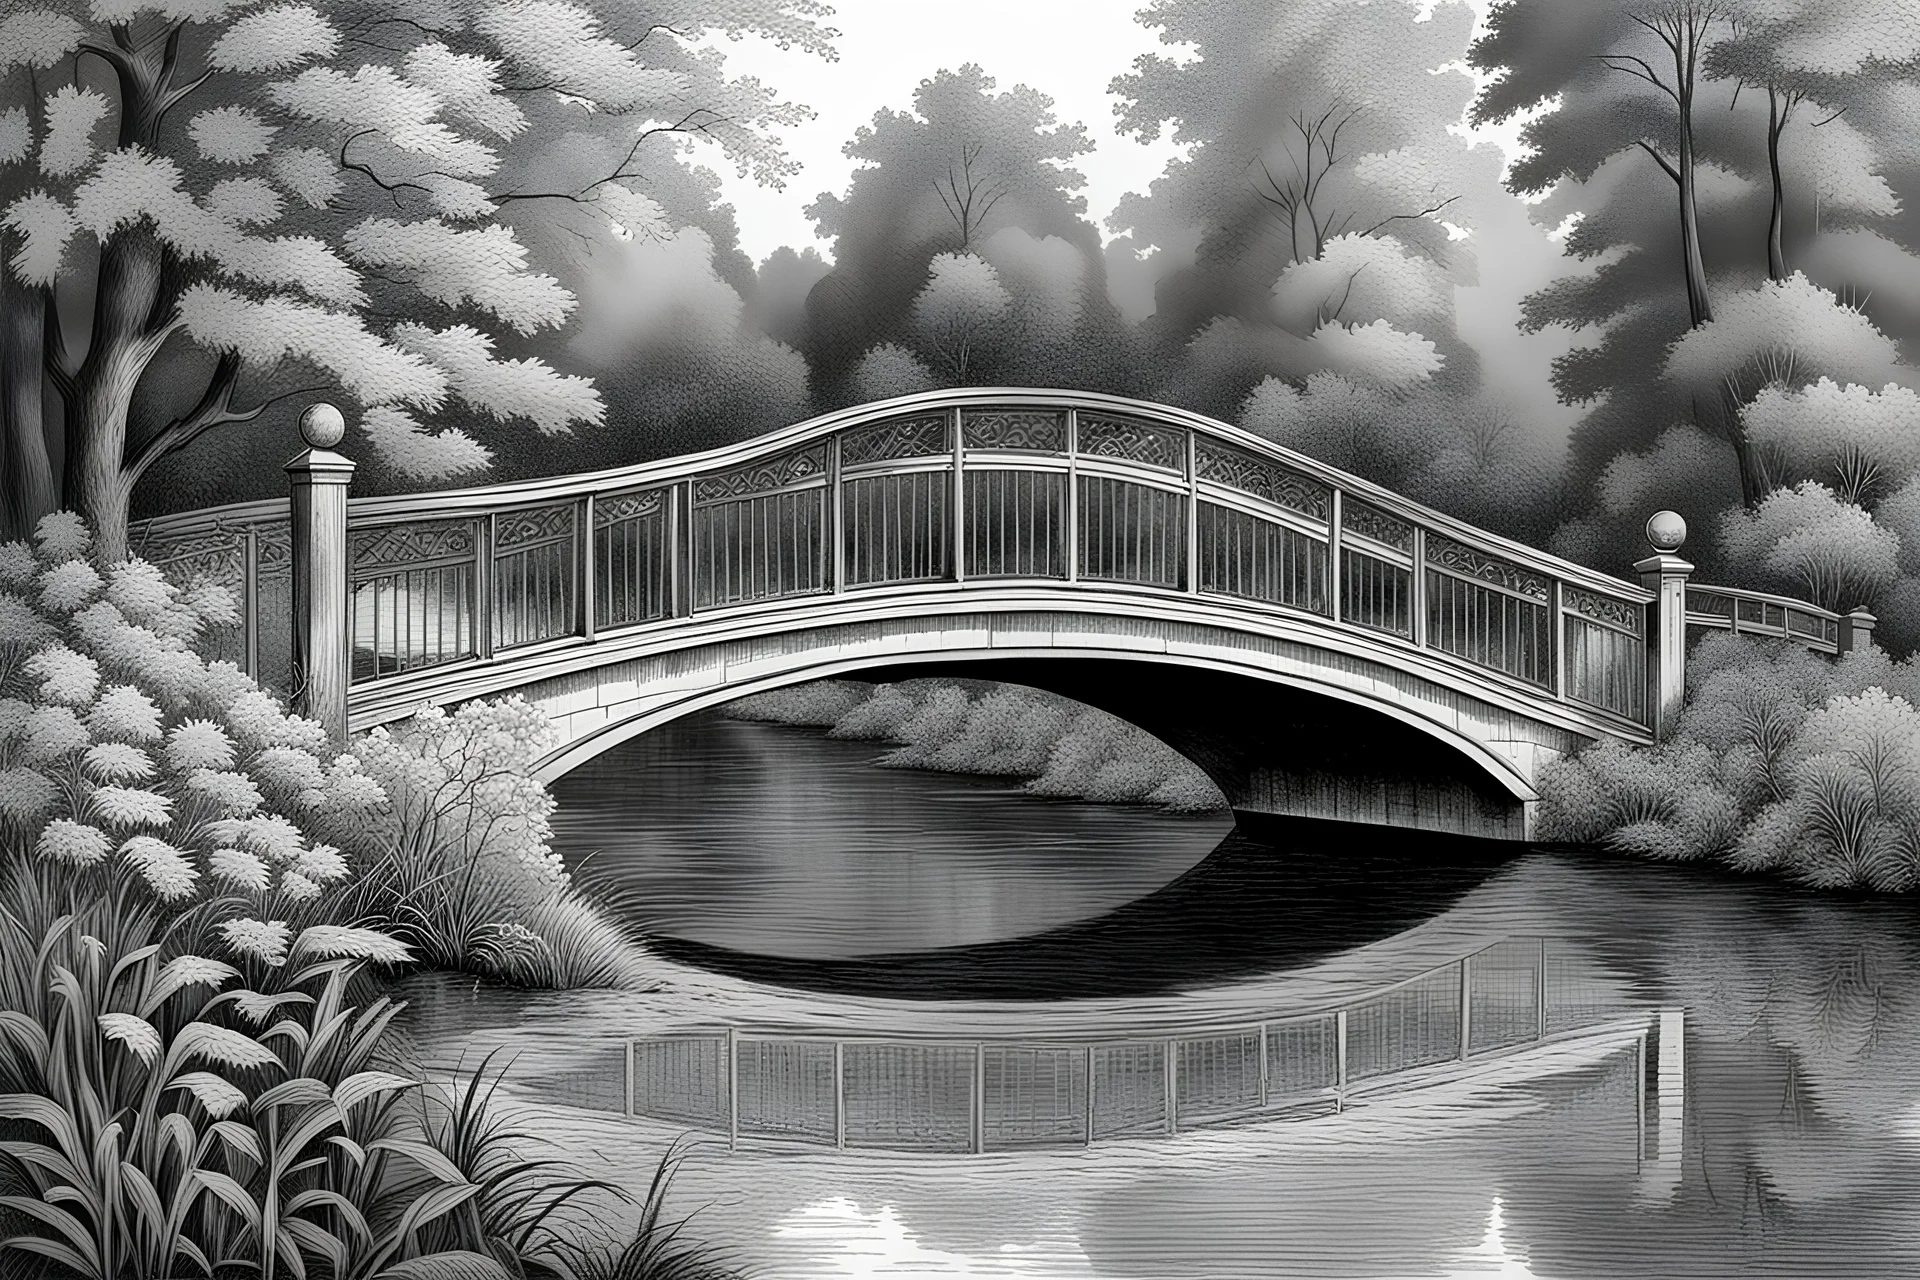 Bridge and lake, engraving technique